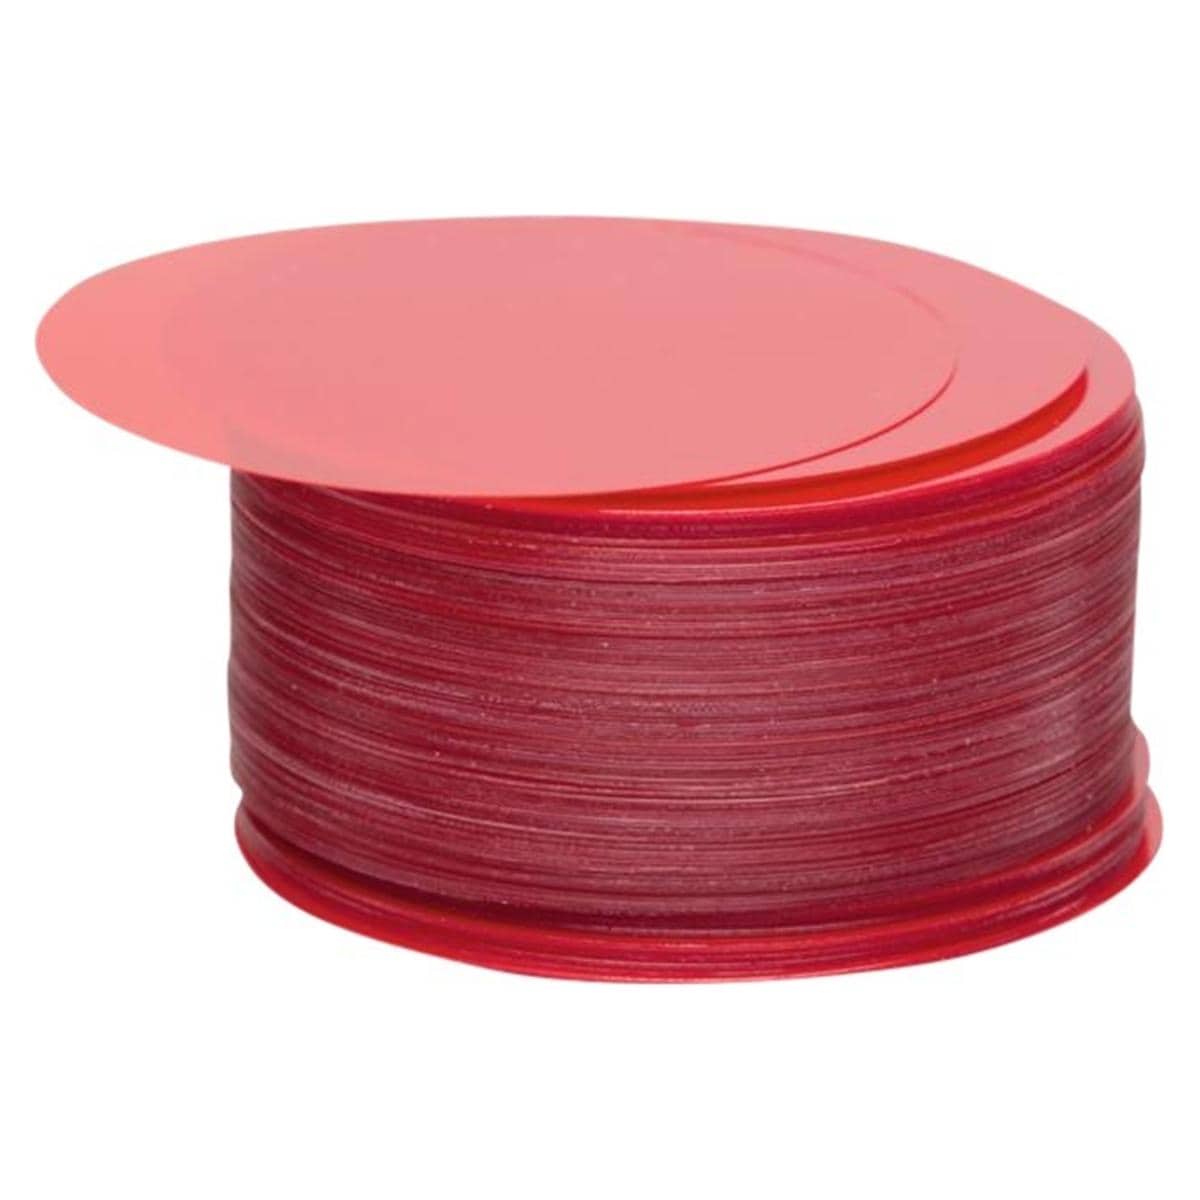 Adapta-Folien - Platzhalterfolie Stärke 0,1 mm, rot, Packung 200 Stück